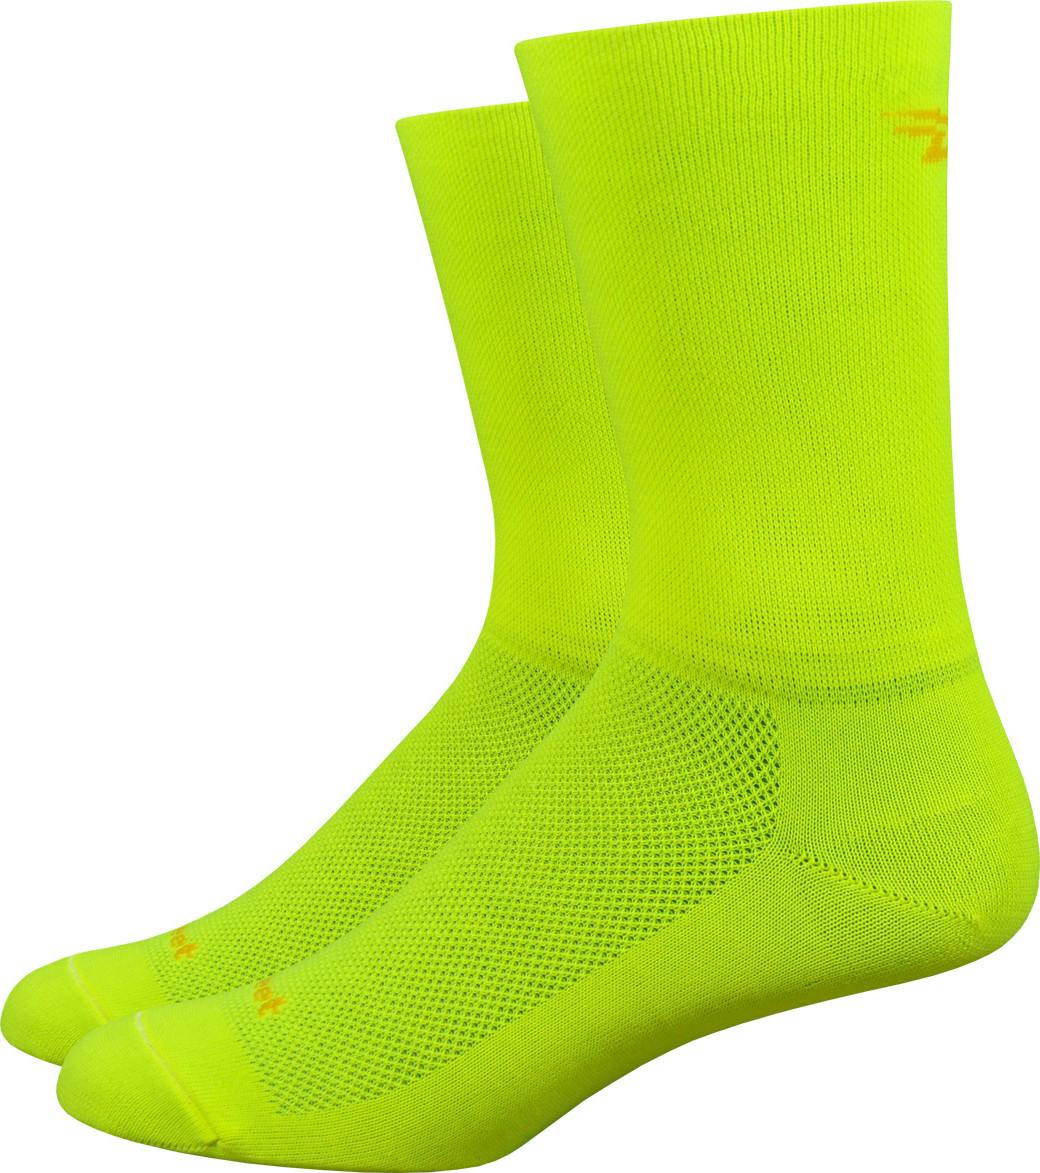 Aireator 6 Inch Socks Neon Yellow